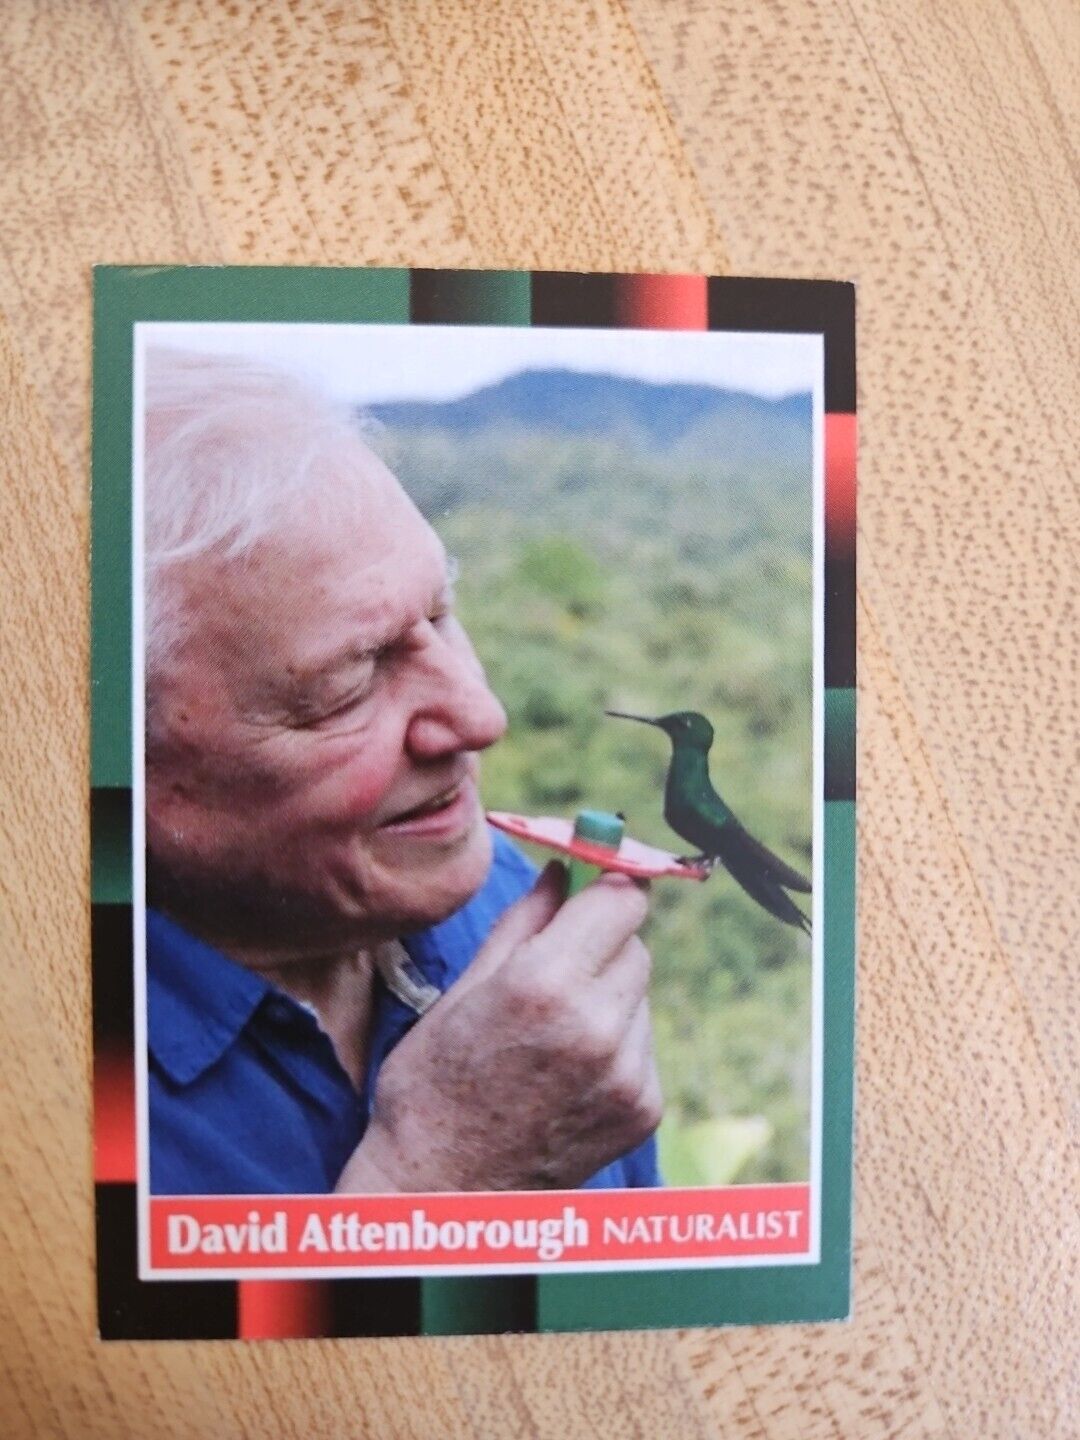 David Attenborough Custom Signed Card - Naturalist (Back Signed)